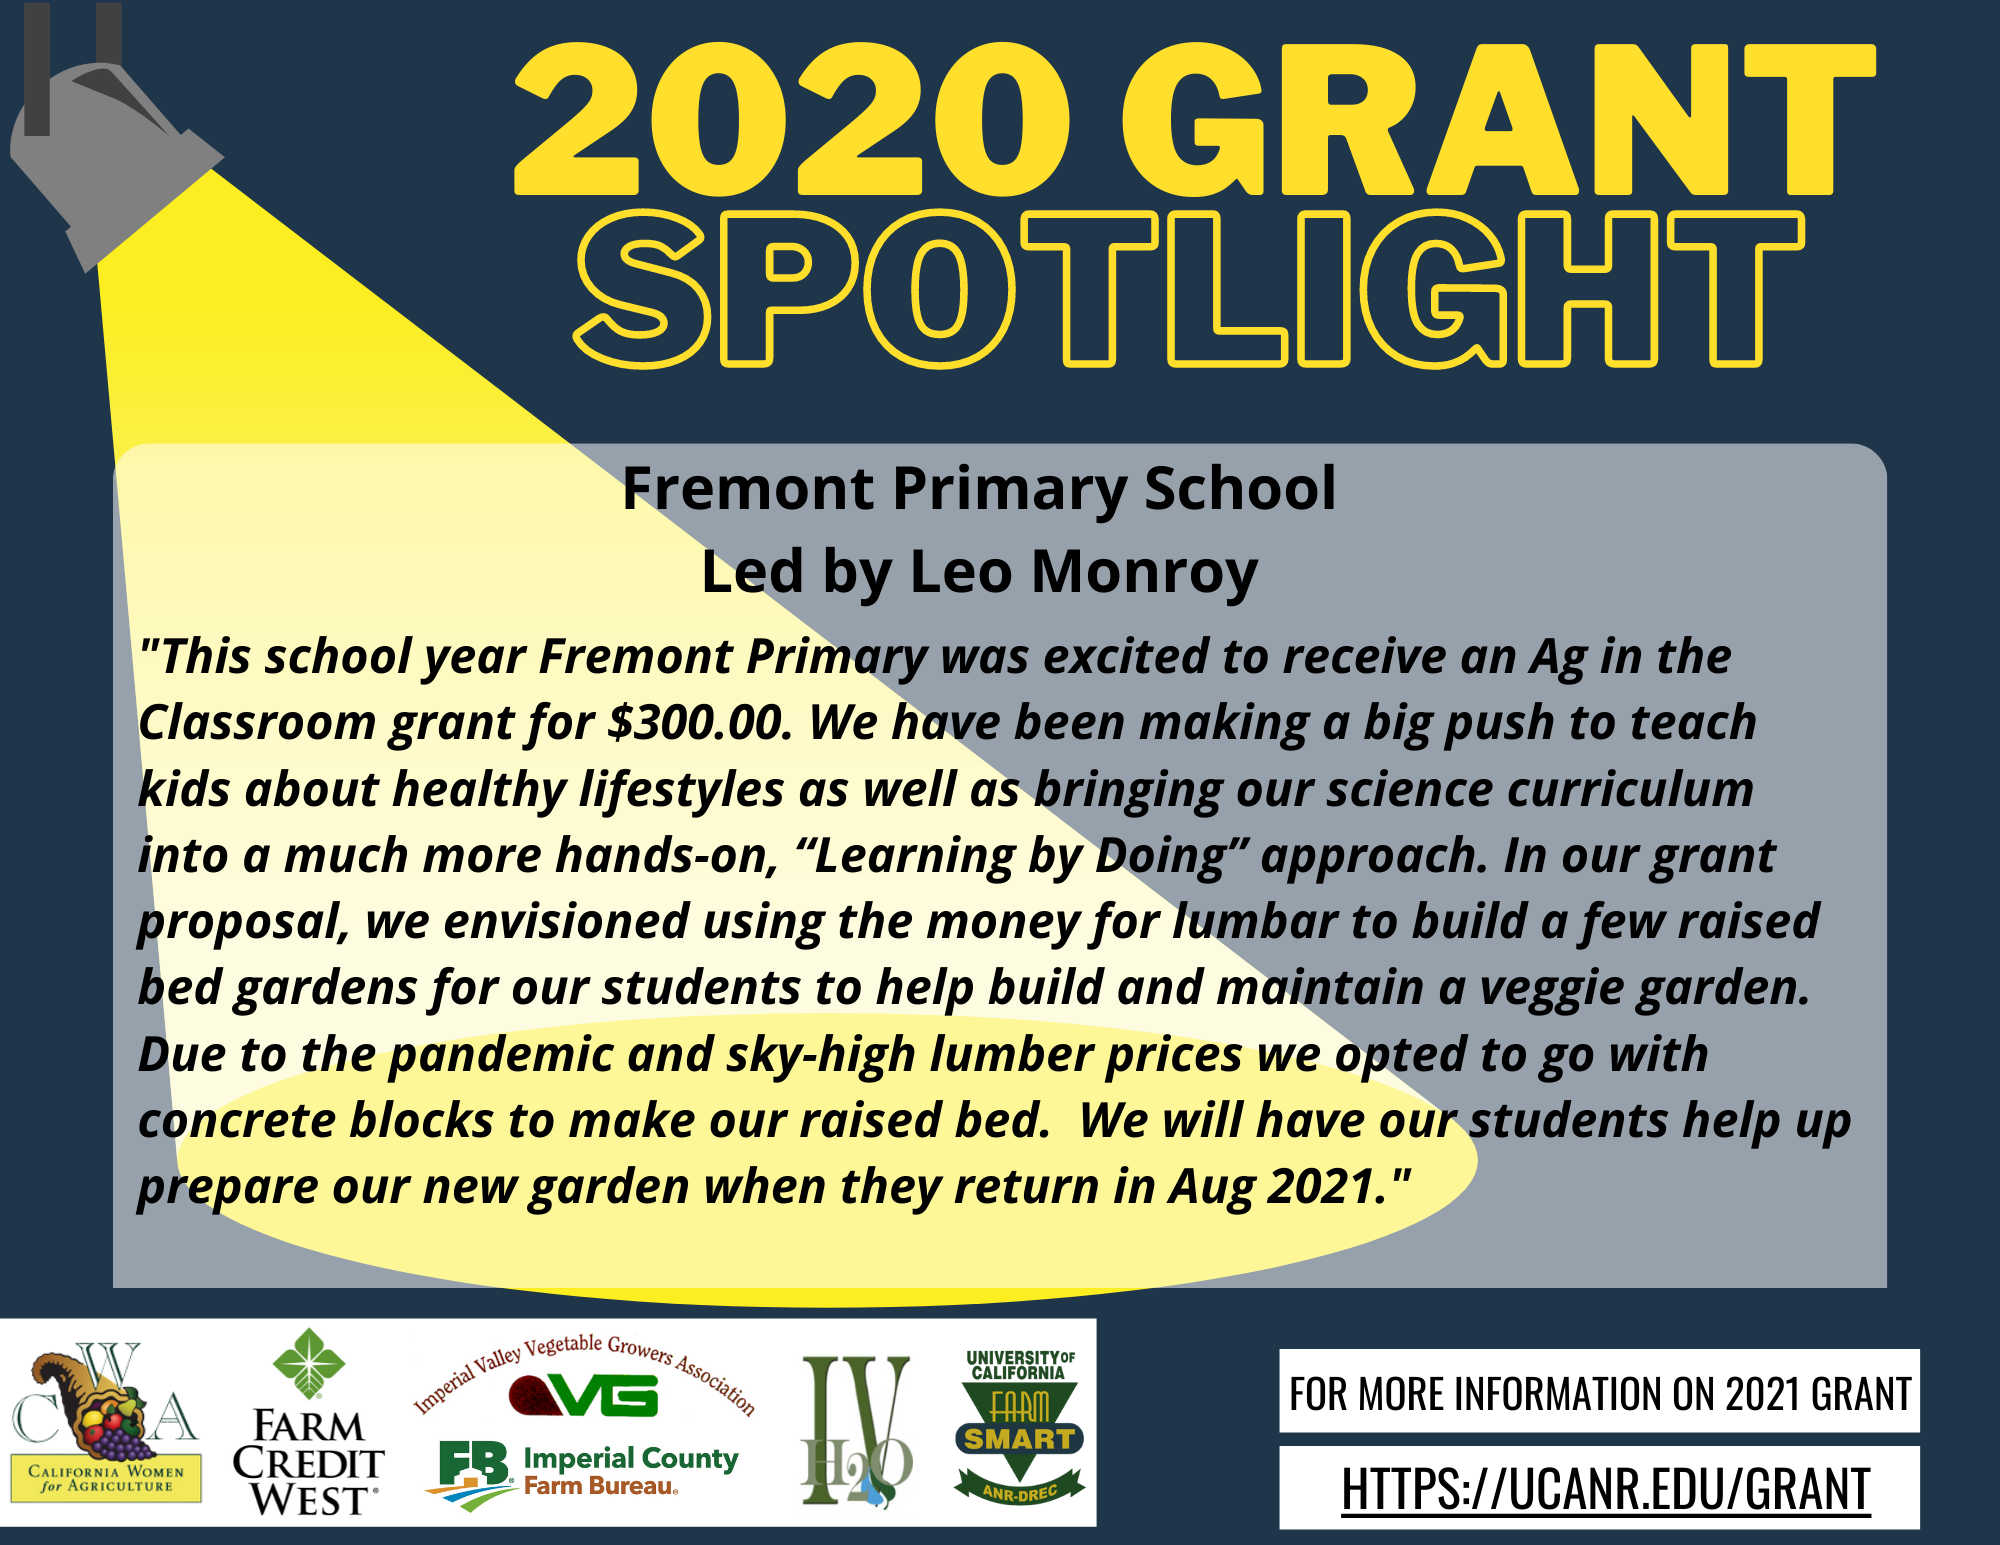 2020 grant spotlight-Fremont Primary School Leo Monroy